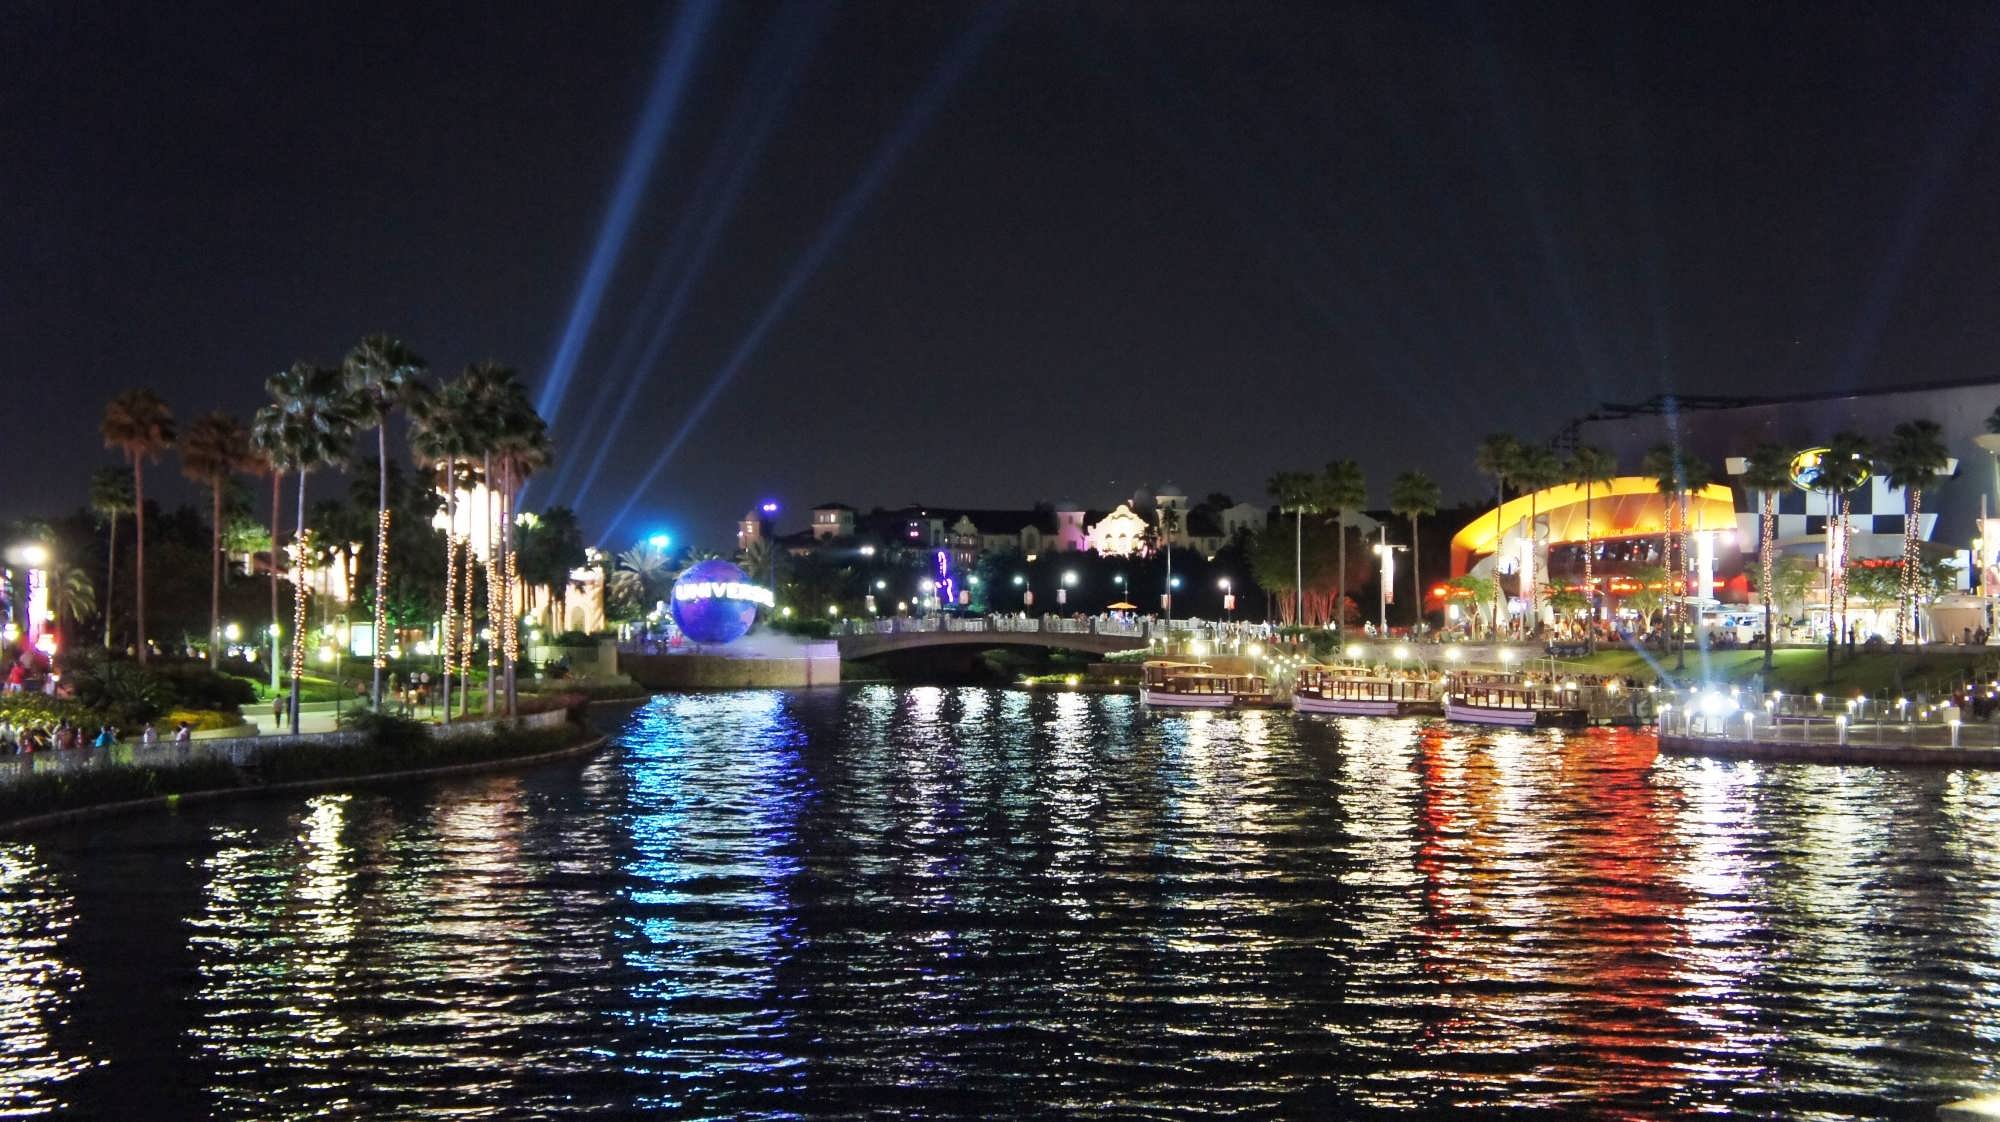 Universal Studios Florida Summer Concert Series & CityWalk at night